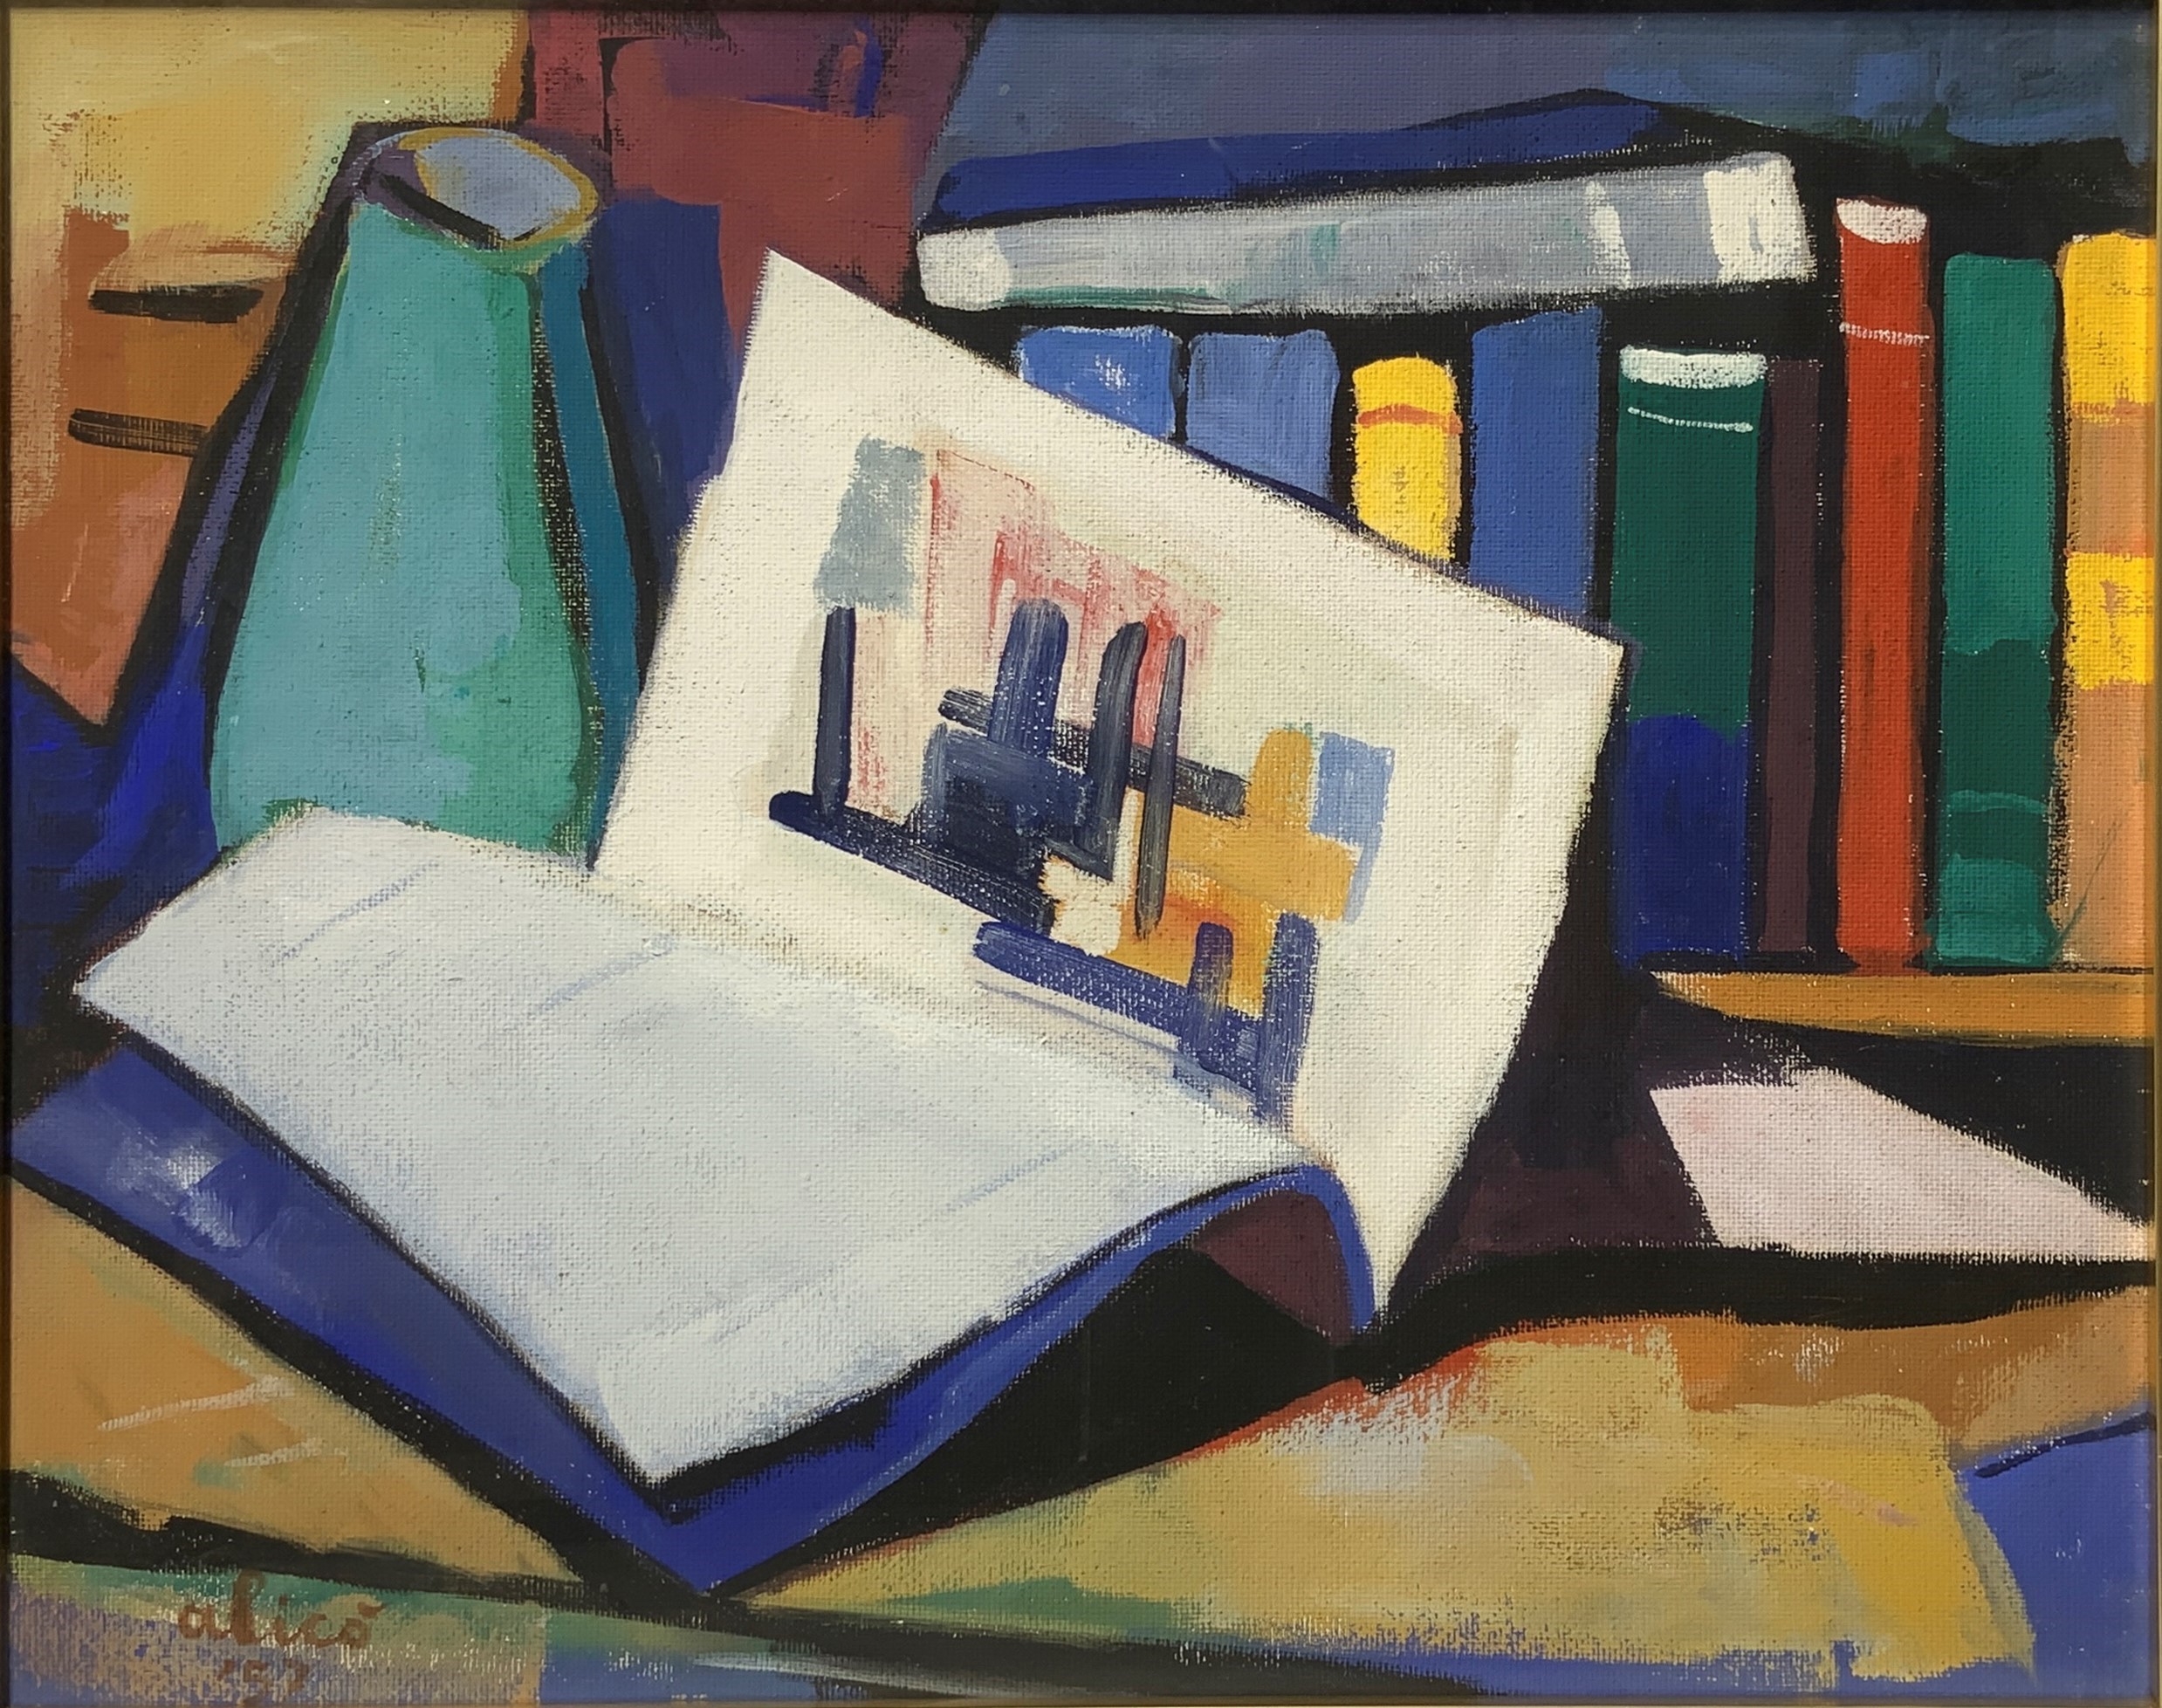 Library, still life by Giovanni Alico, 1957